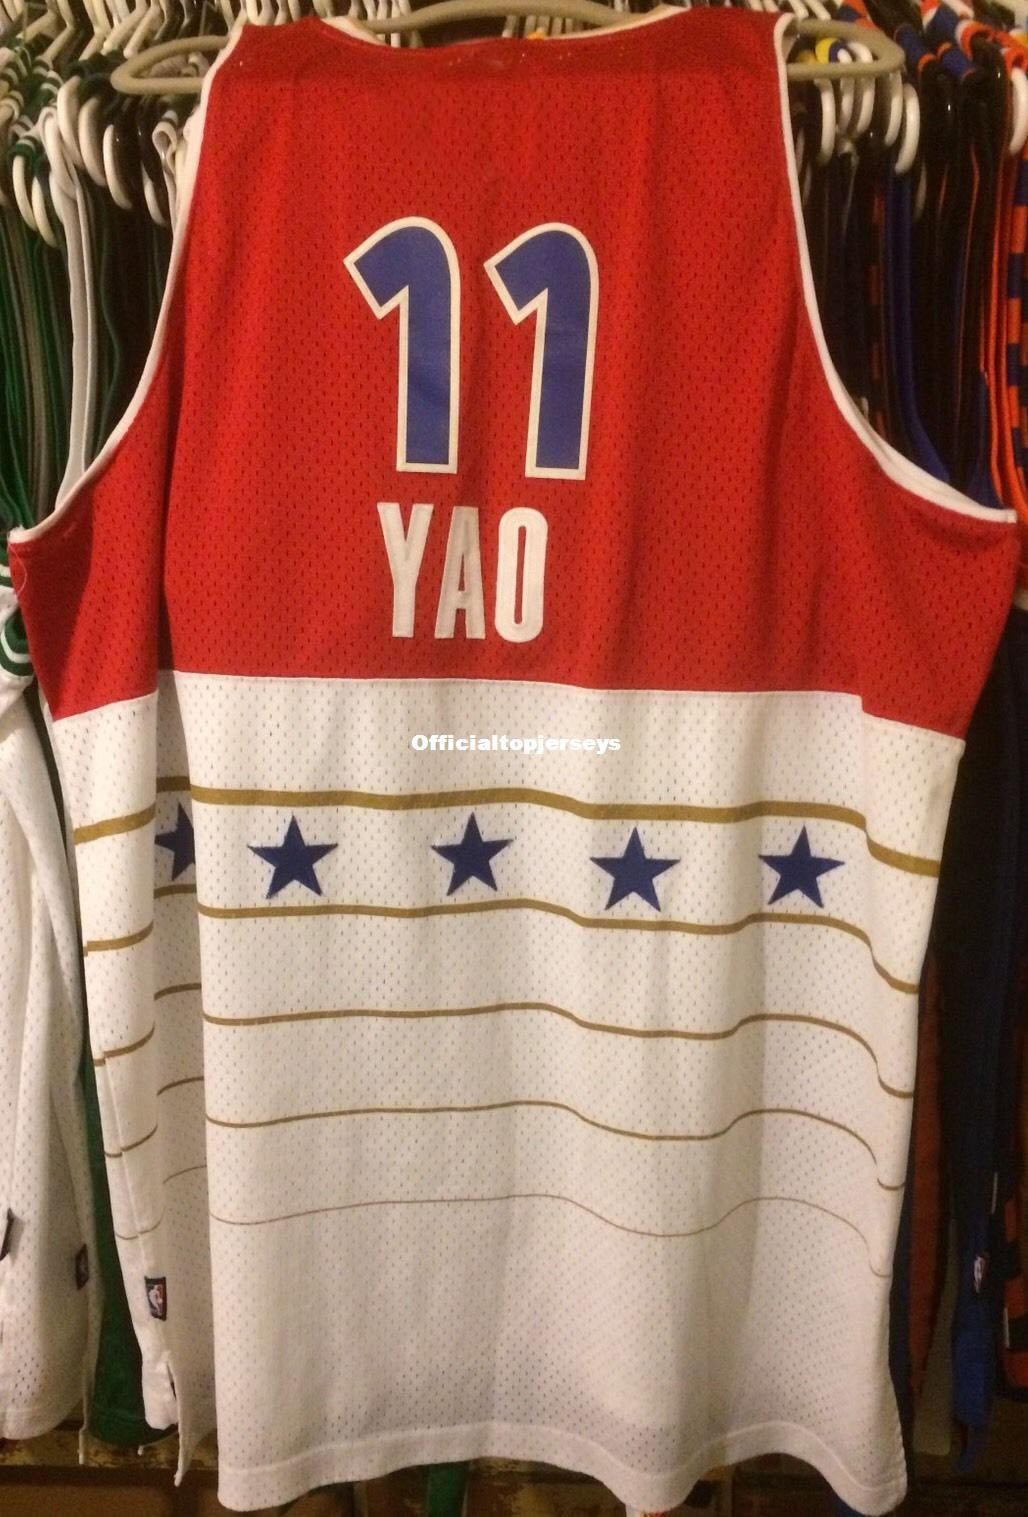 yao ming all star jersey